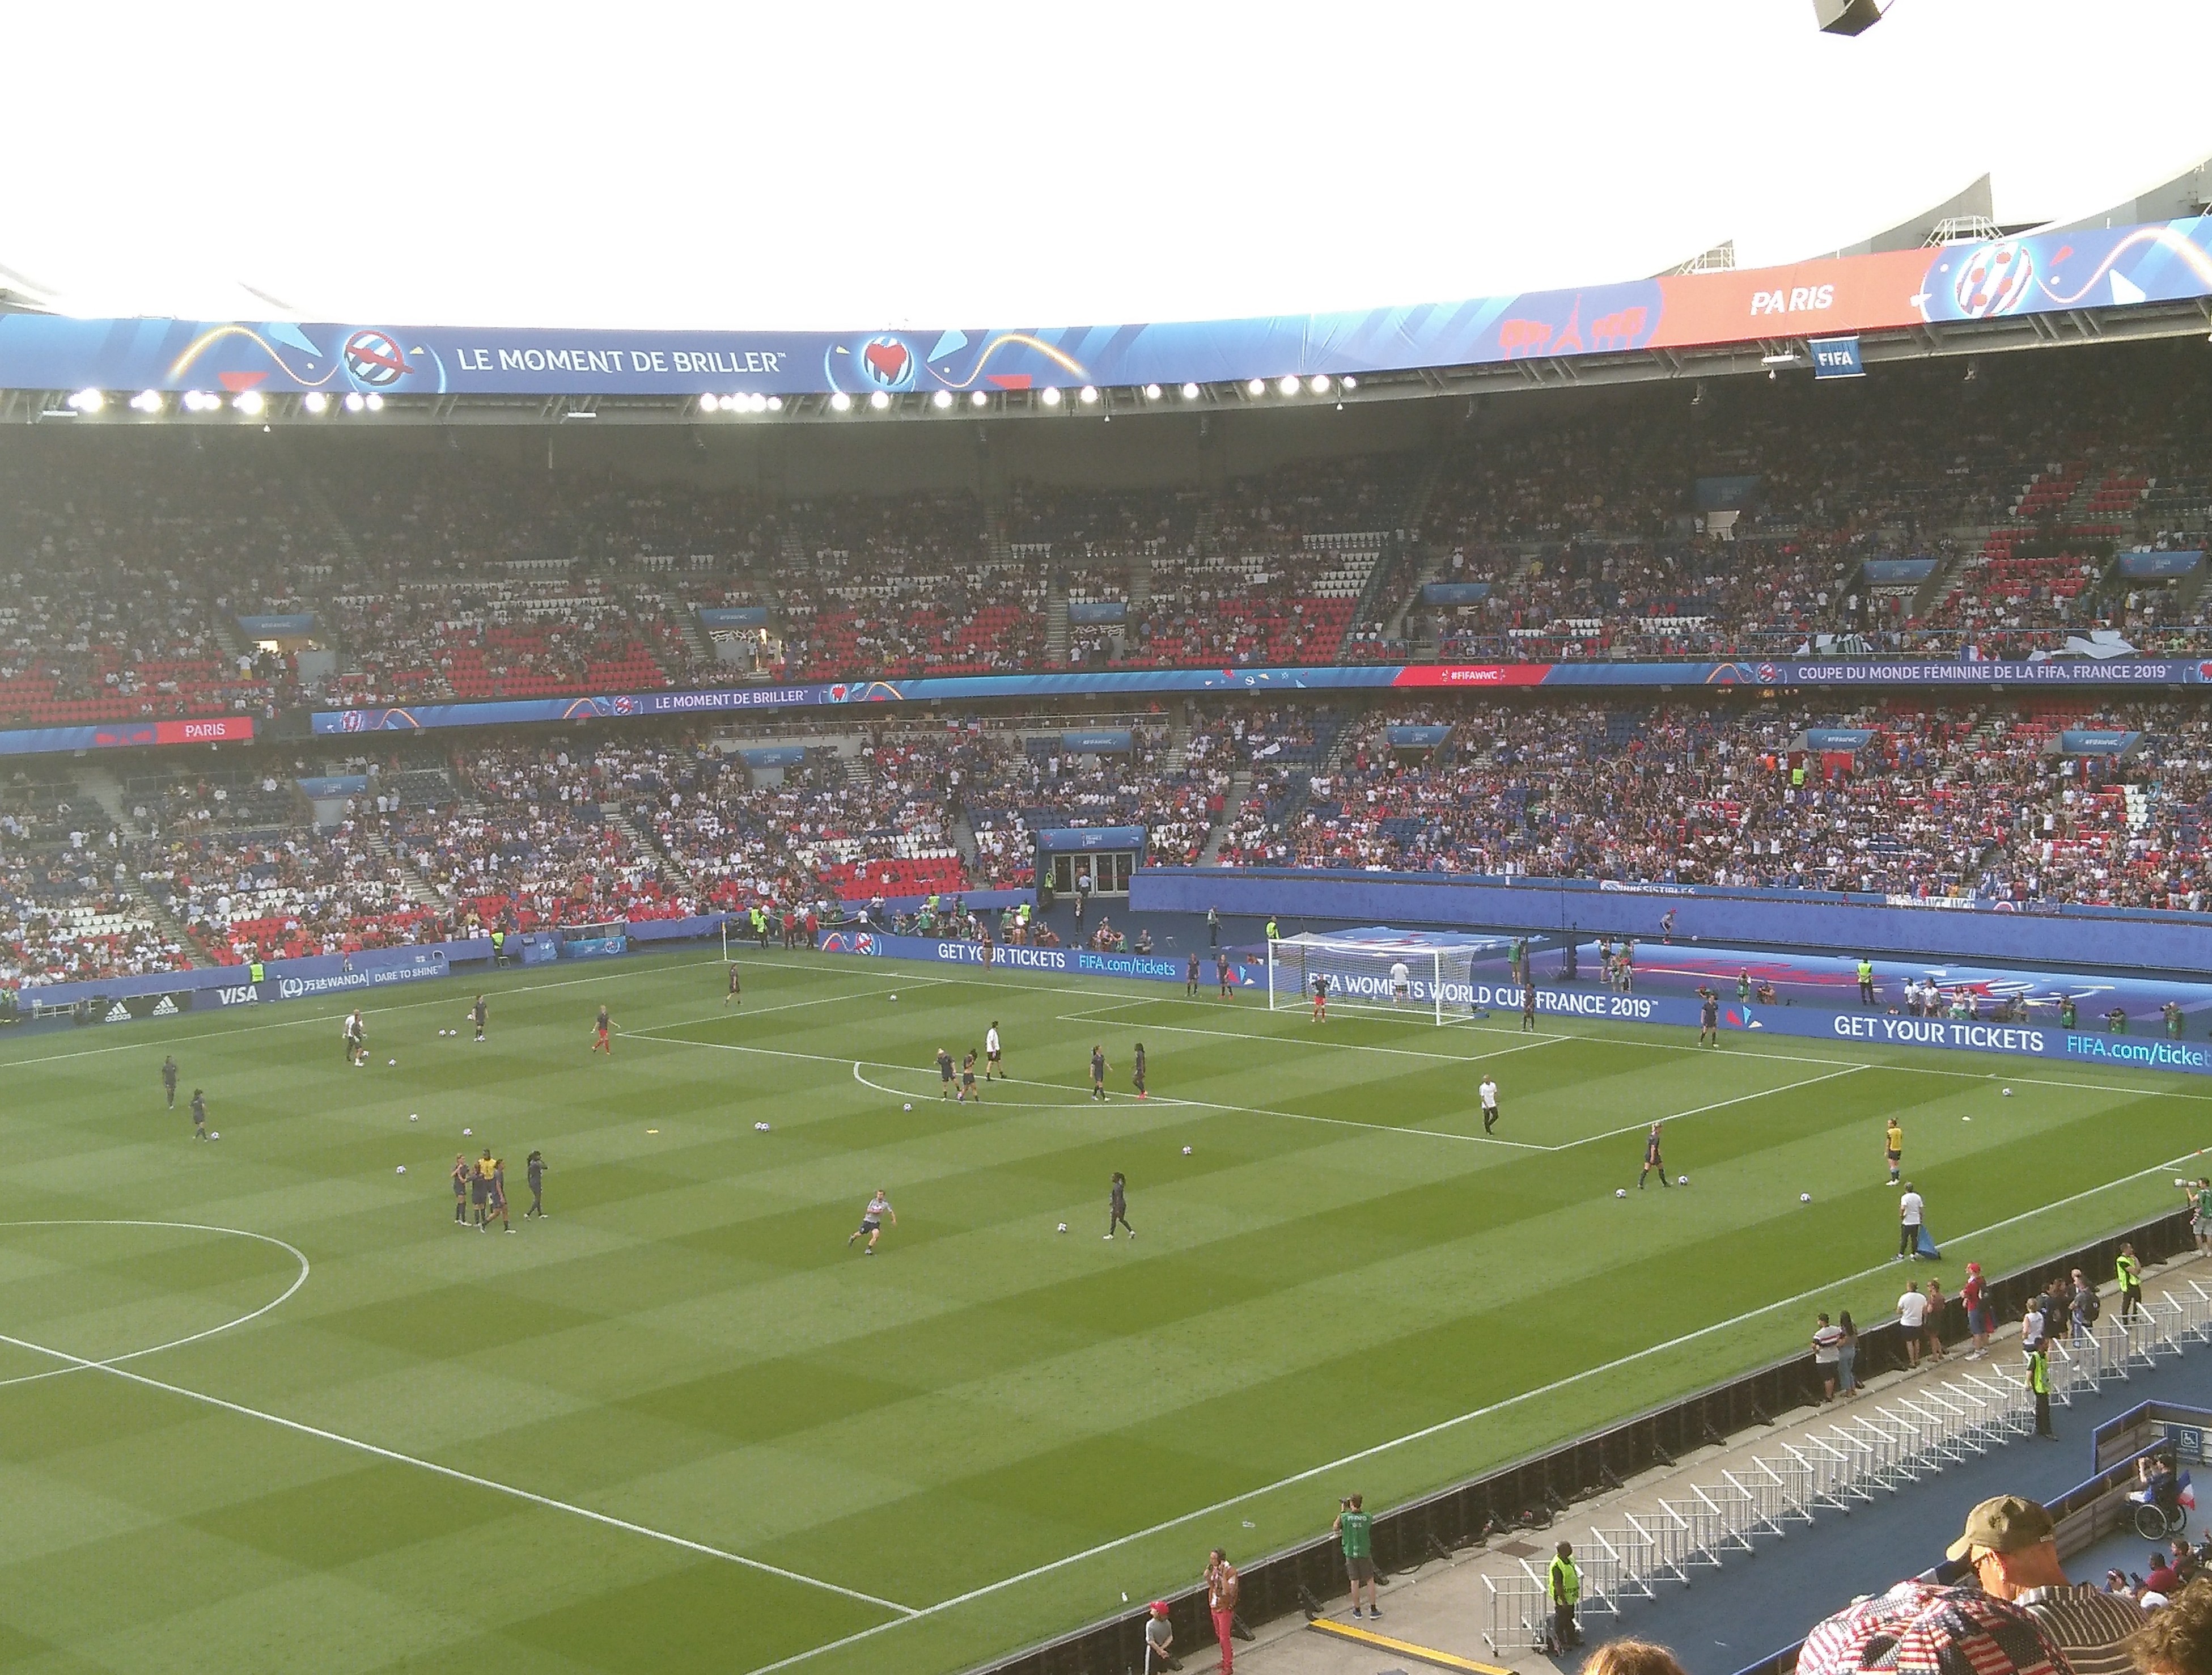 File:France vs USA FIFA Women's World cup 20190628 01.jpg - Wikimedia Commons